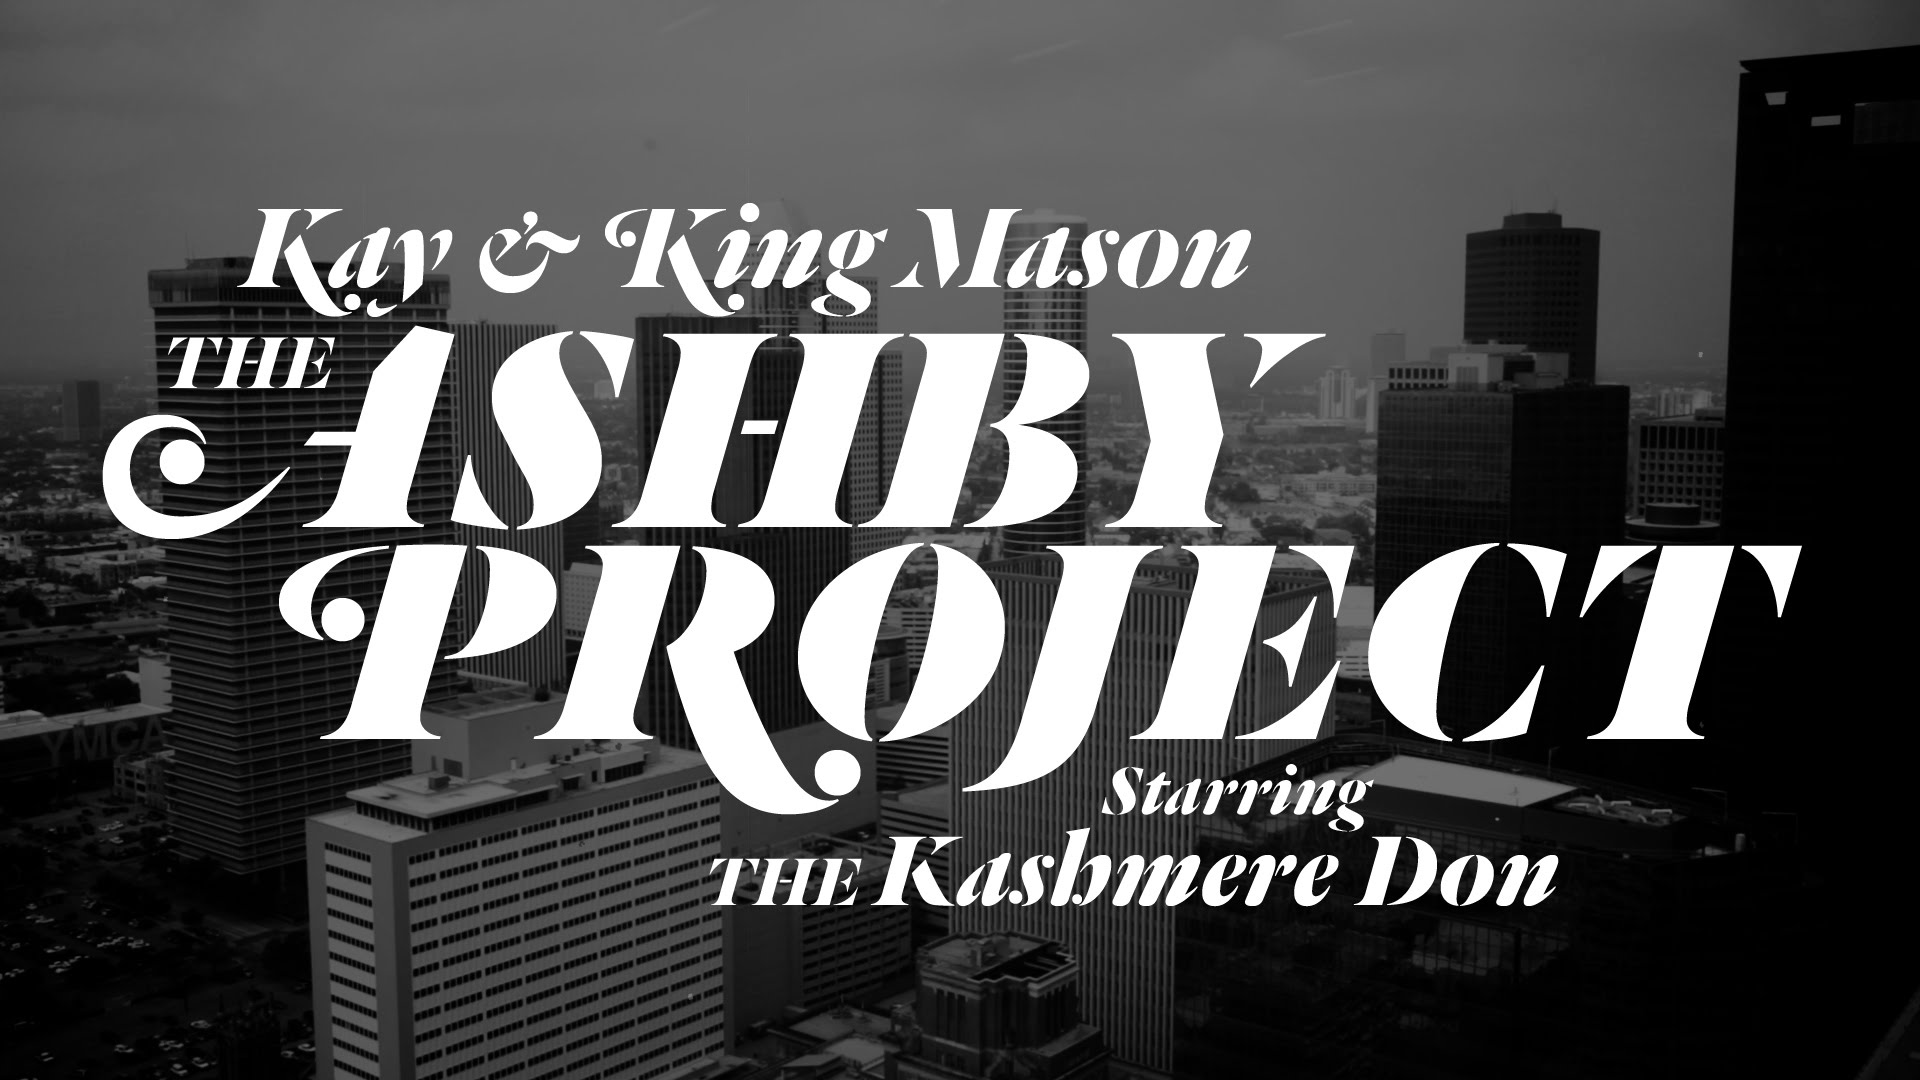 Kay & King Mason x Kashmere Don — “Joyful” Video